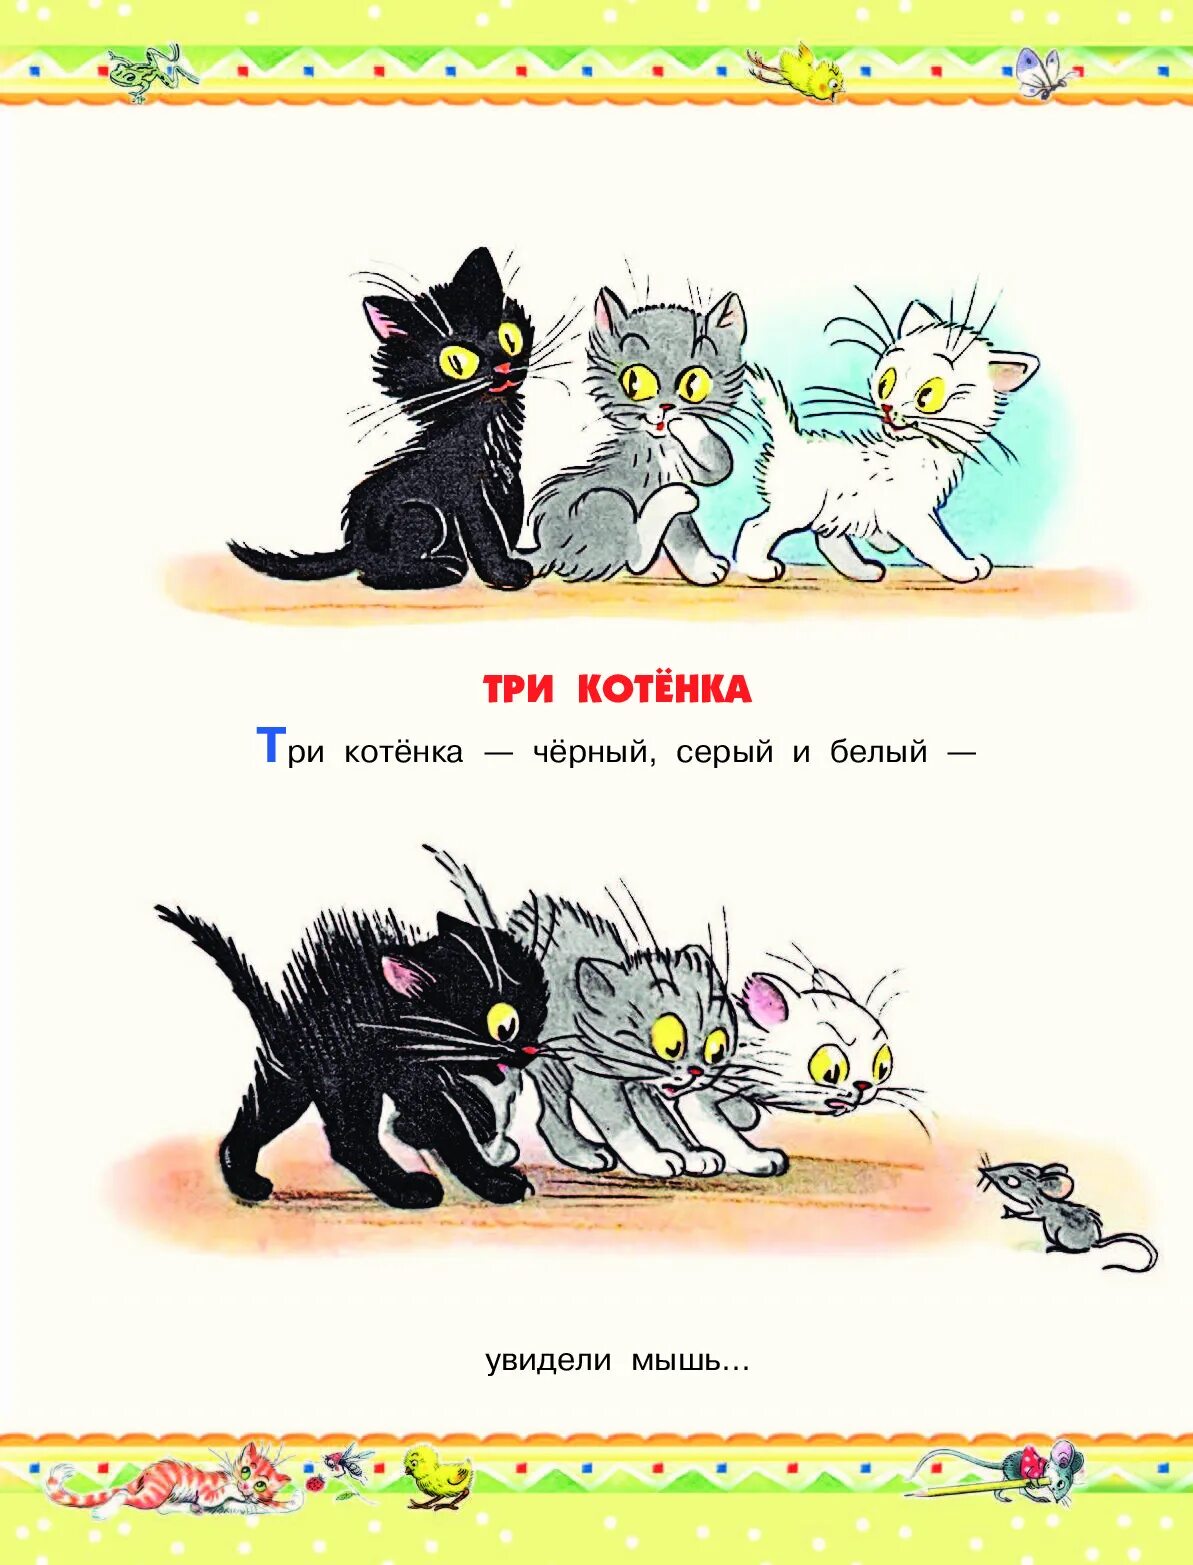 Три котенка слова. Сутеев 3 котенка. Сказки Сутеева три котенка. Иллюстрации к сказке Сутеева три котенка.